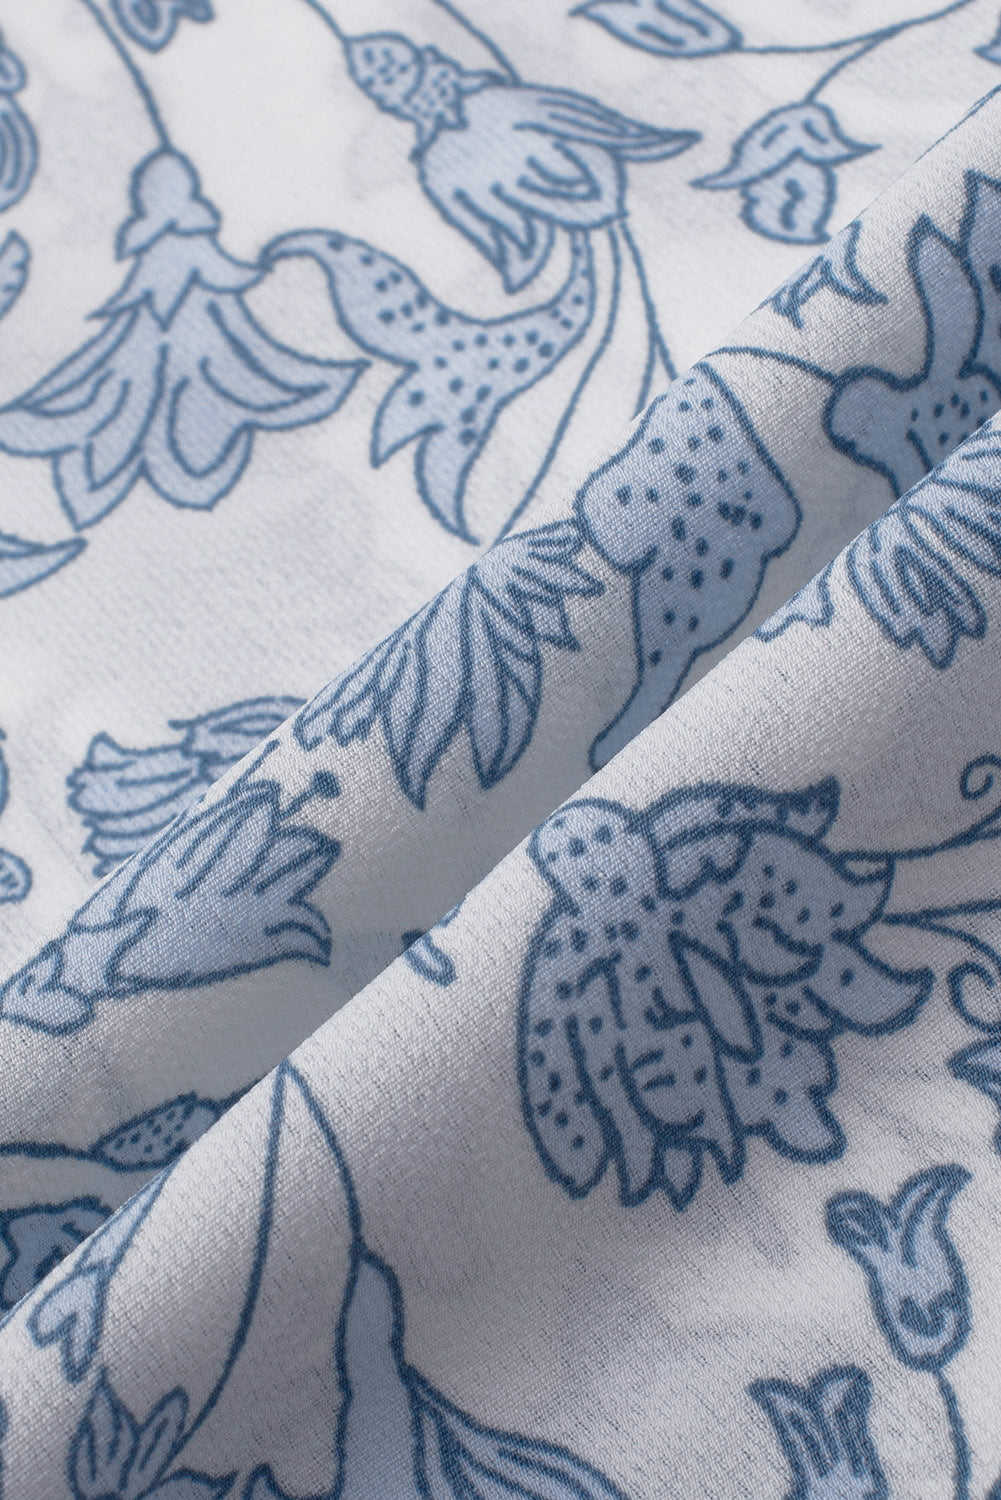 Sky Blue V Neck Short Sleeve Print Floral Blouses Shirts LC2514201-4